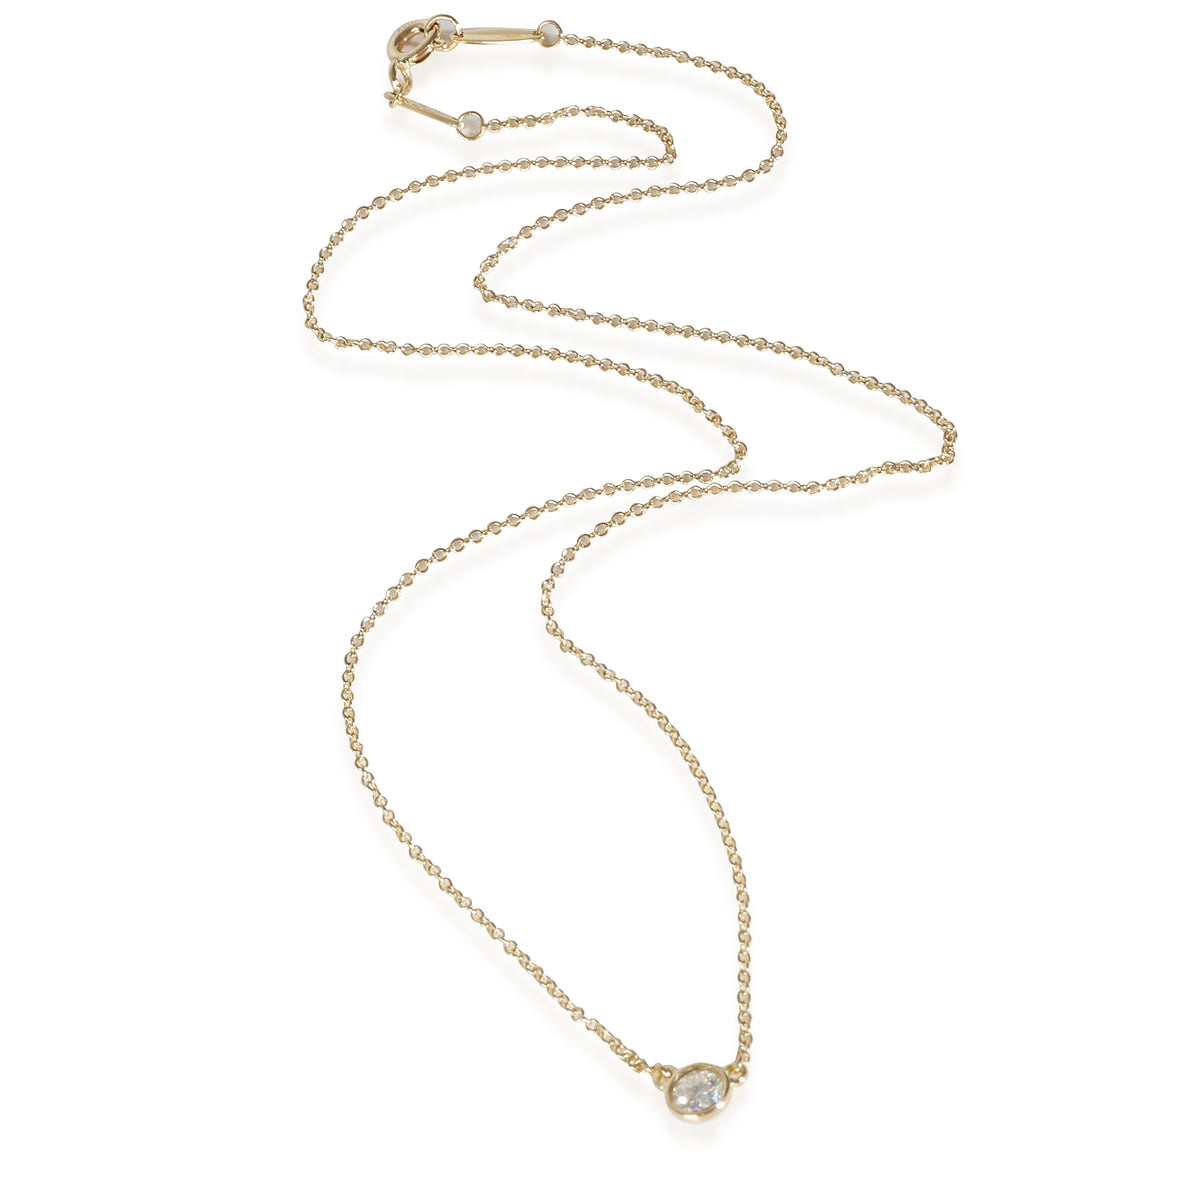 Elsa Peretti Fashion Necklace in 18k Yellow Gold 0.14 CTW